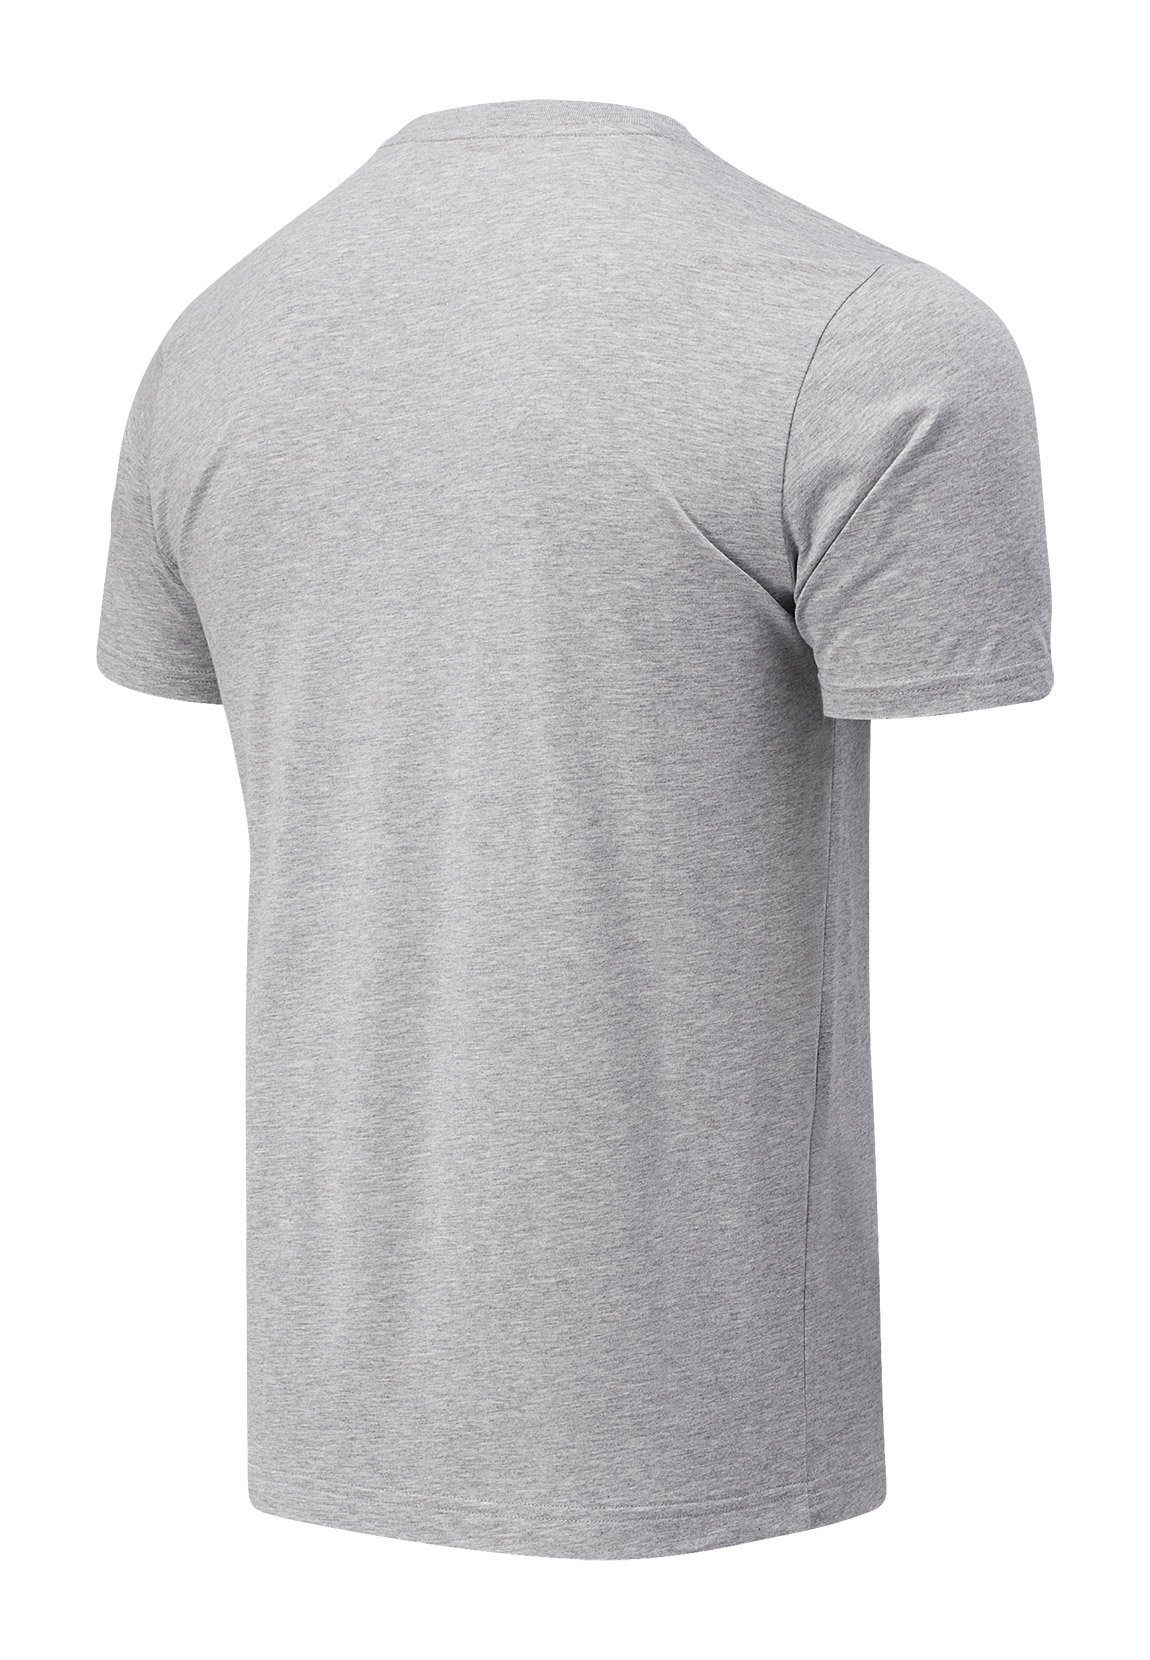 Athletic AG ATHLGREY TEE CORE Balance T-Shirt MT03905 T-Shirt CLASSIC Grey Balance Gau LOGO New New